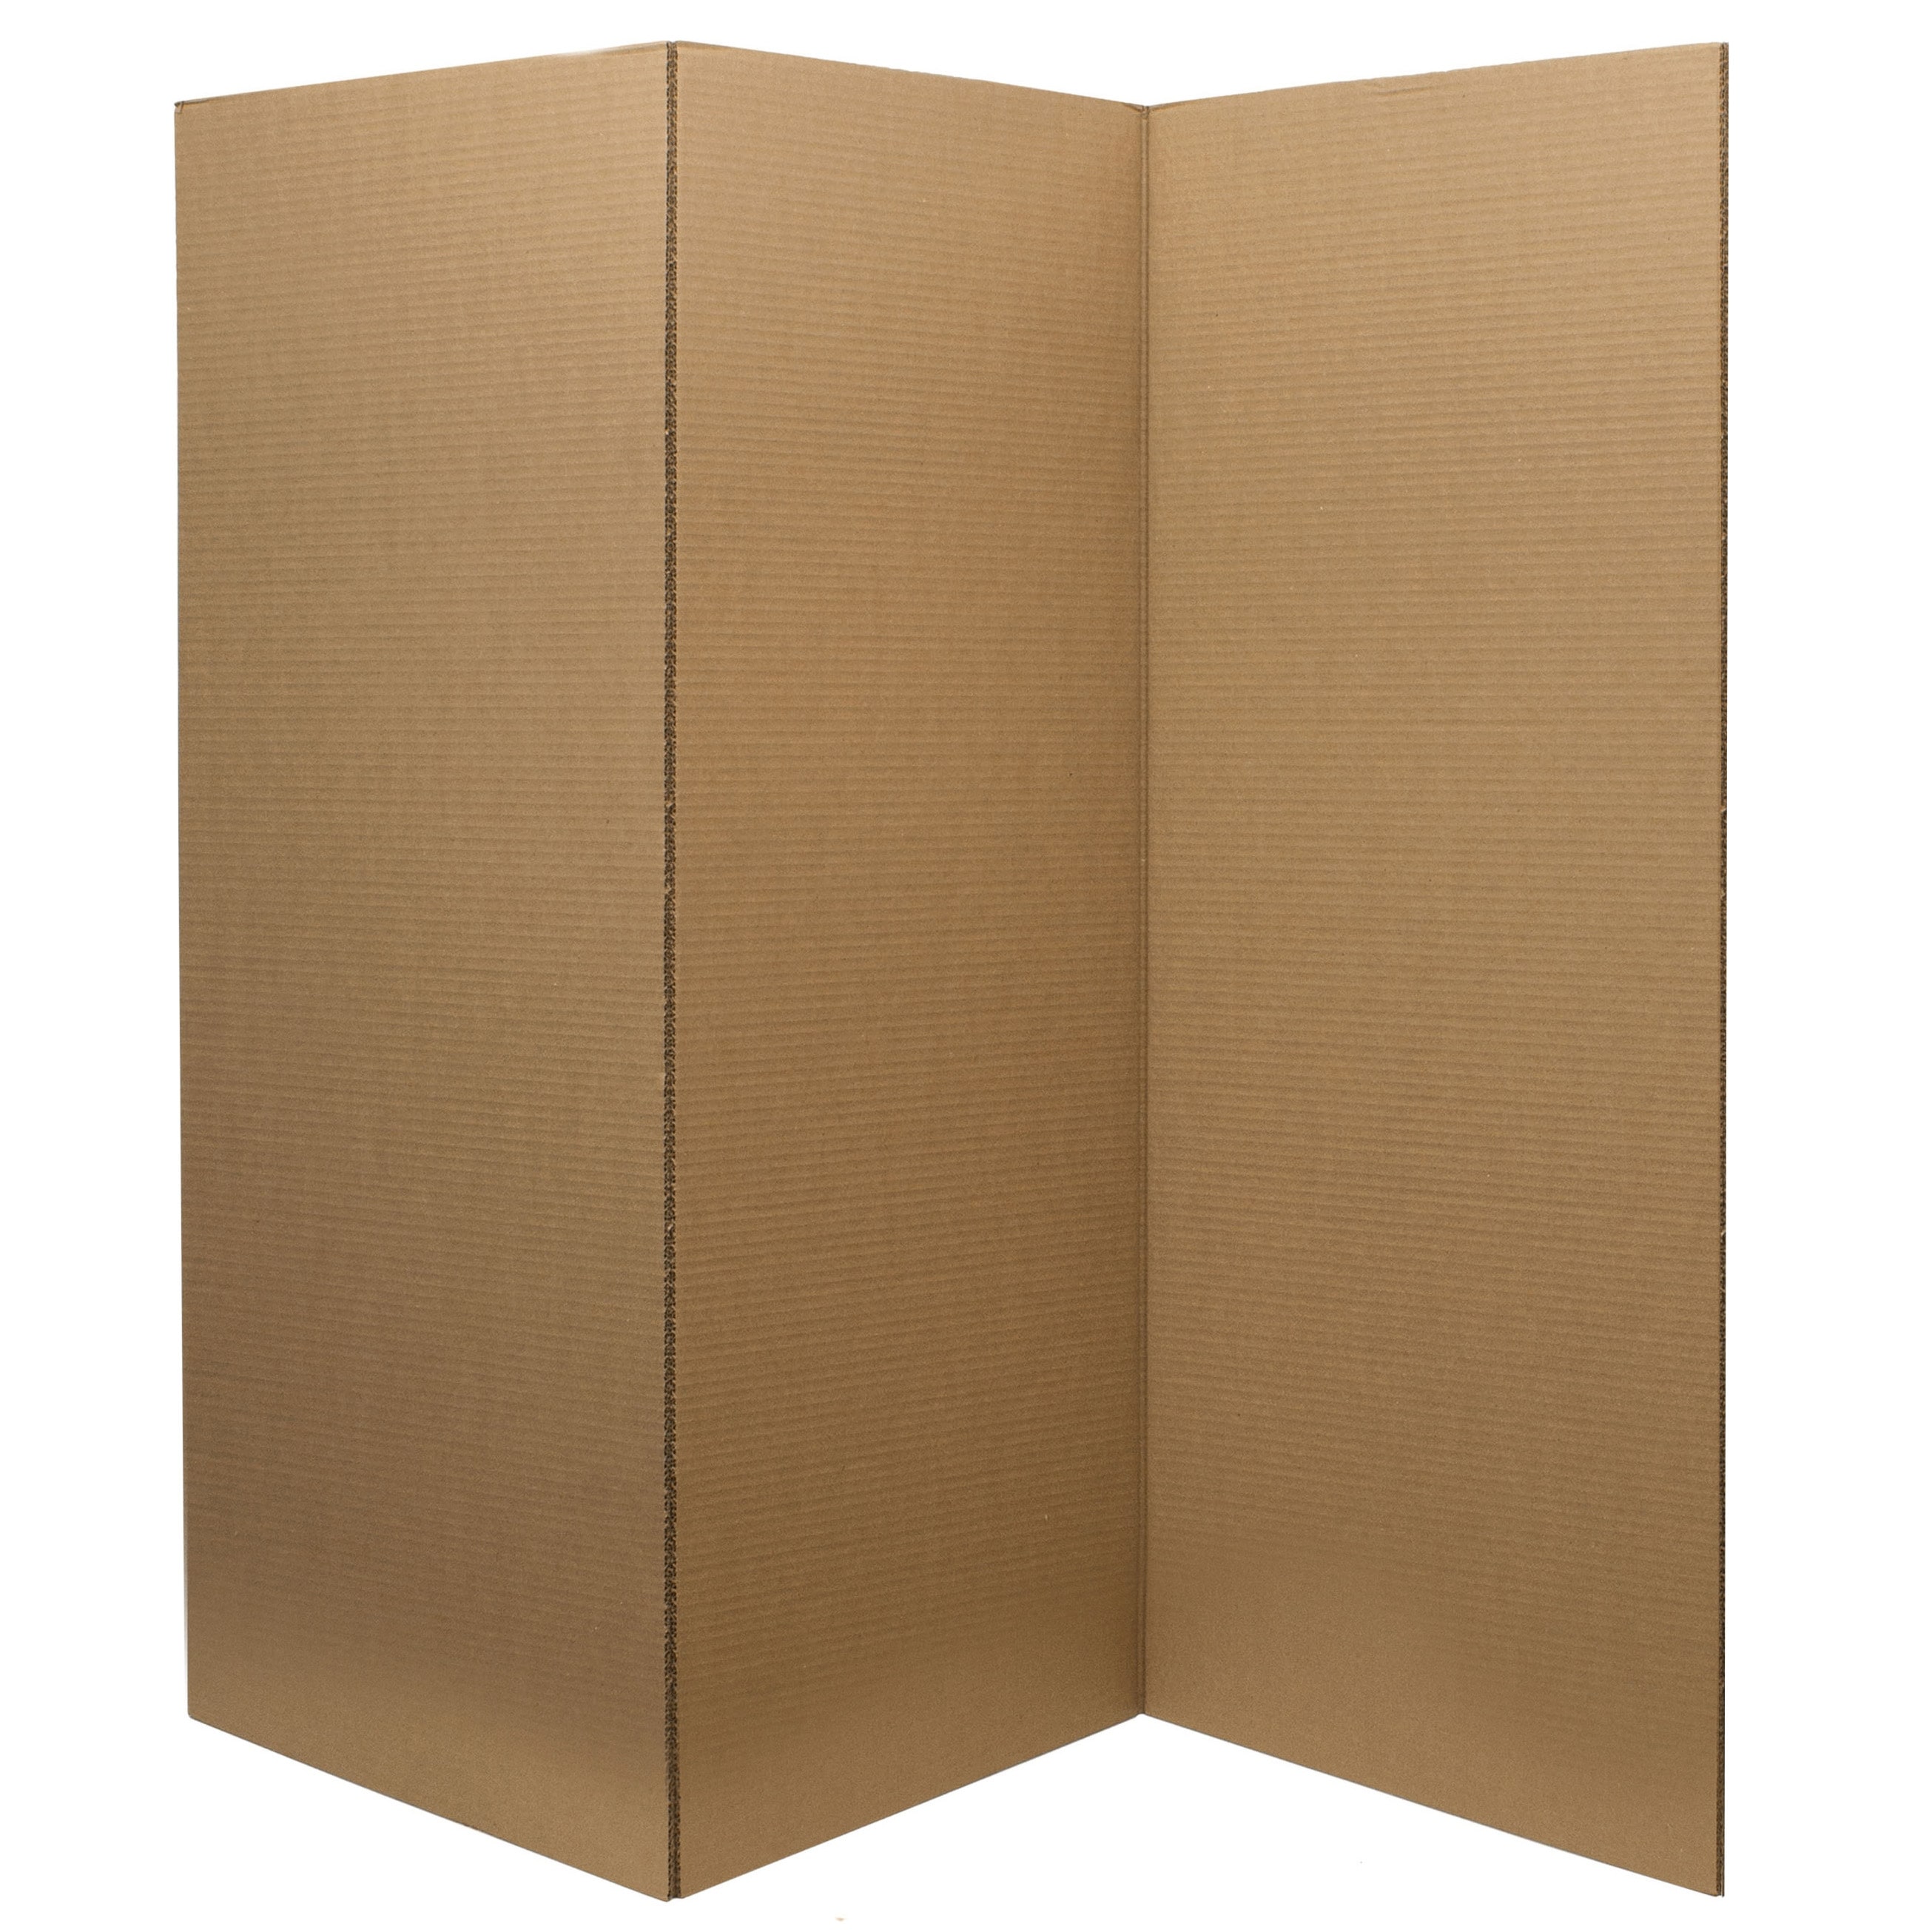 ORIENTAL Furniture 6 ft 4 Panel Tall Brown Cardboard Room Divider